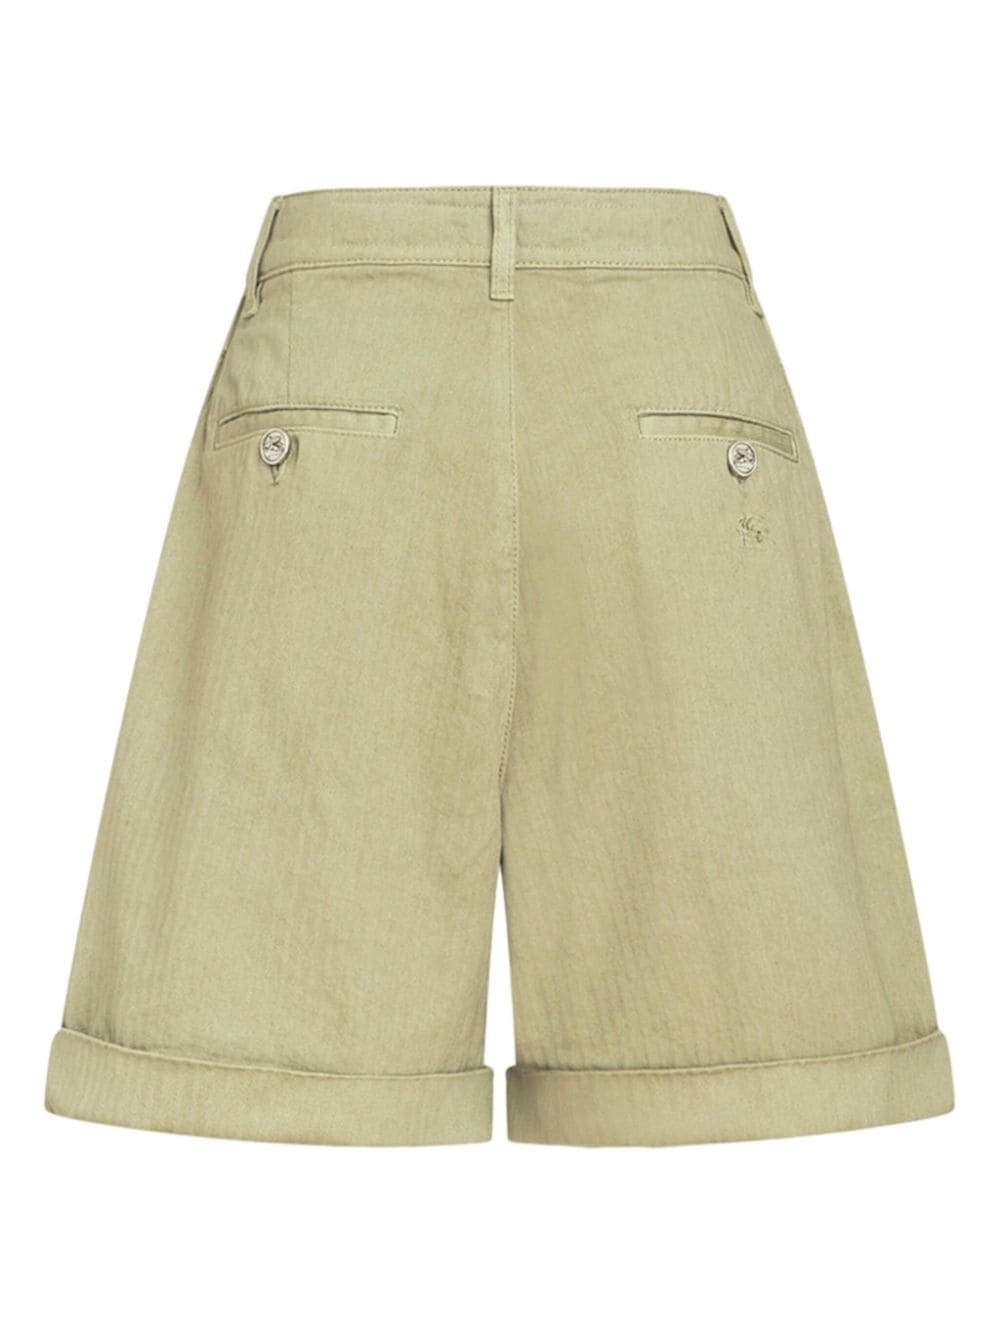 herringbone-pattern cotton bermuda shorts - 7